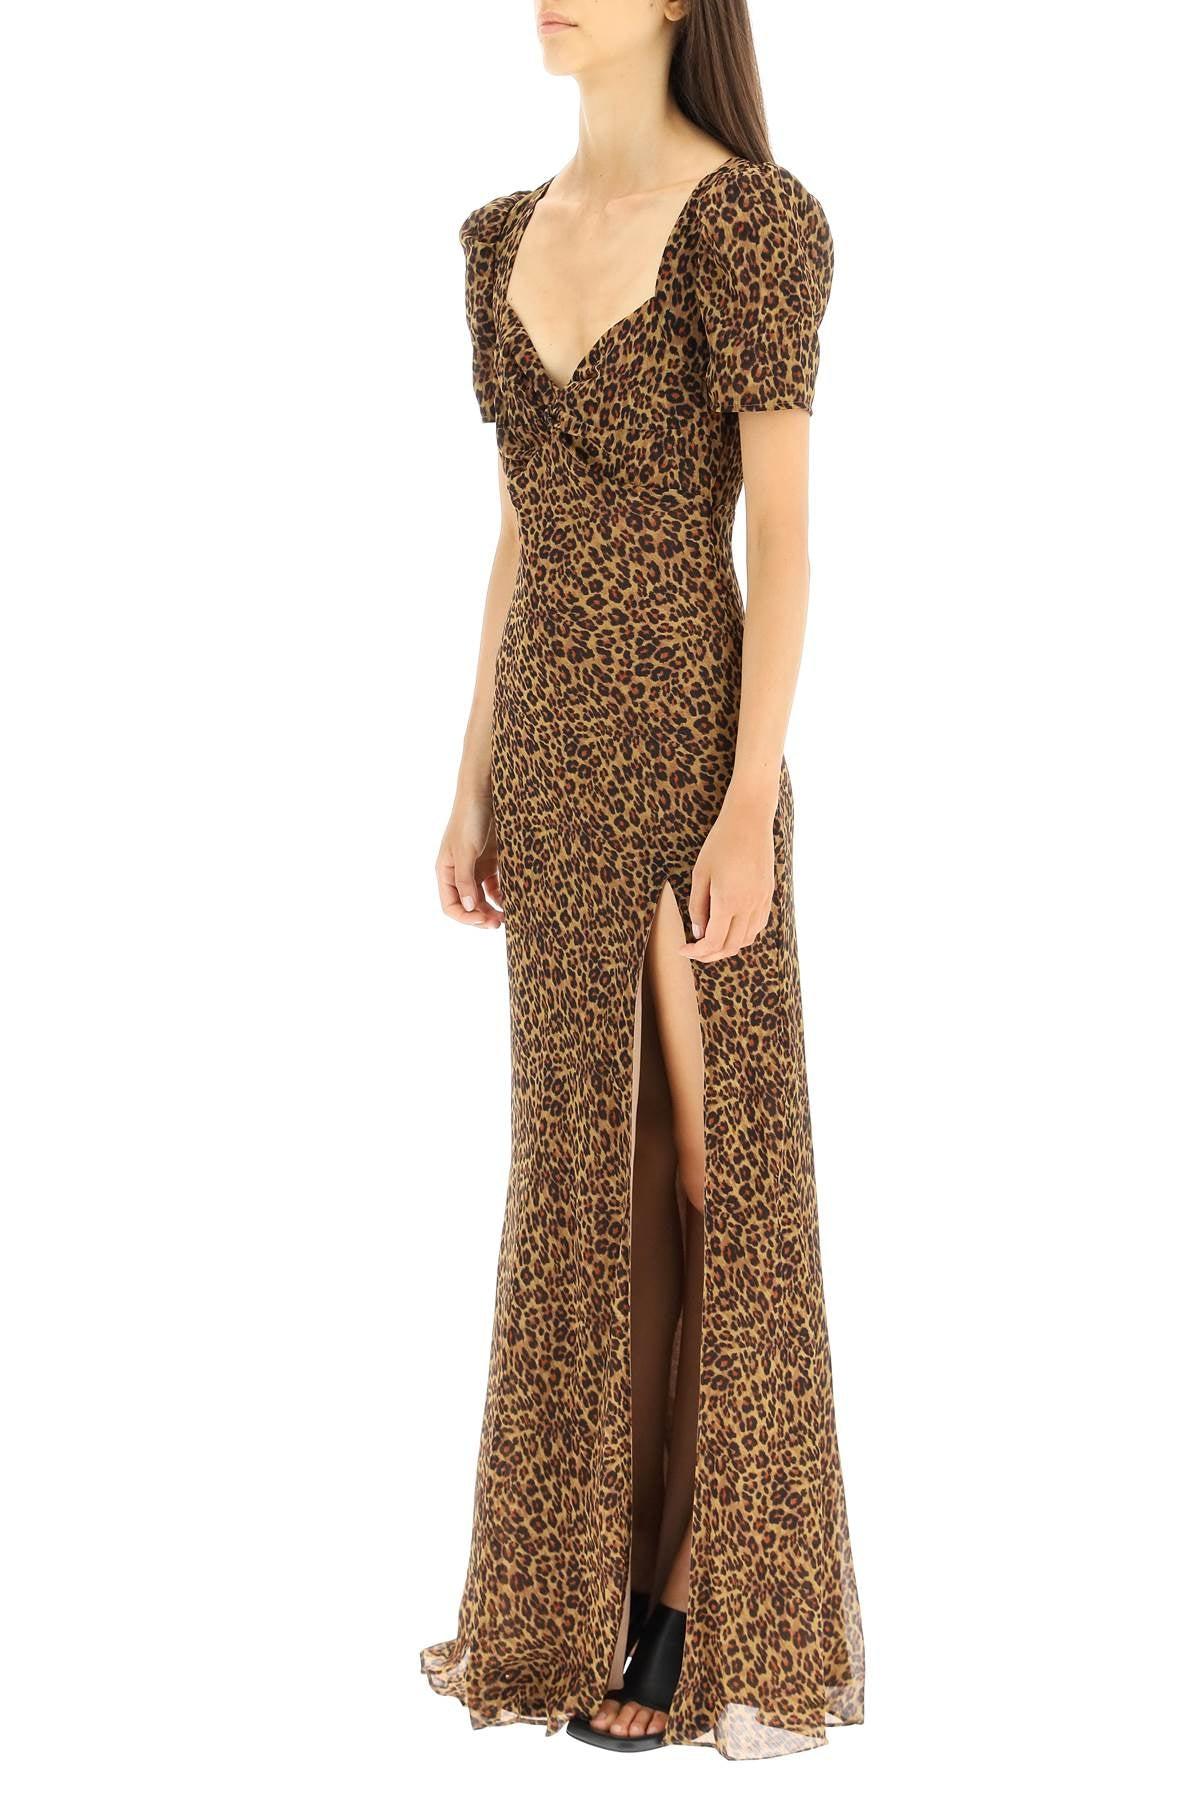 STAUD 'lea' Leopard Print Long Dress in Natural | Lyst